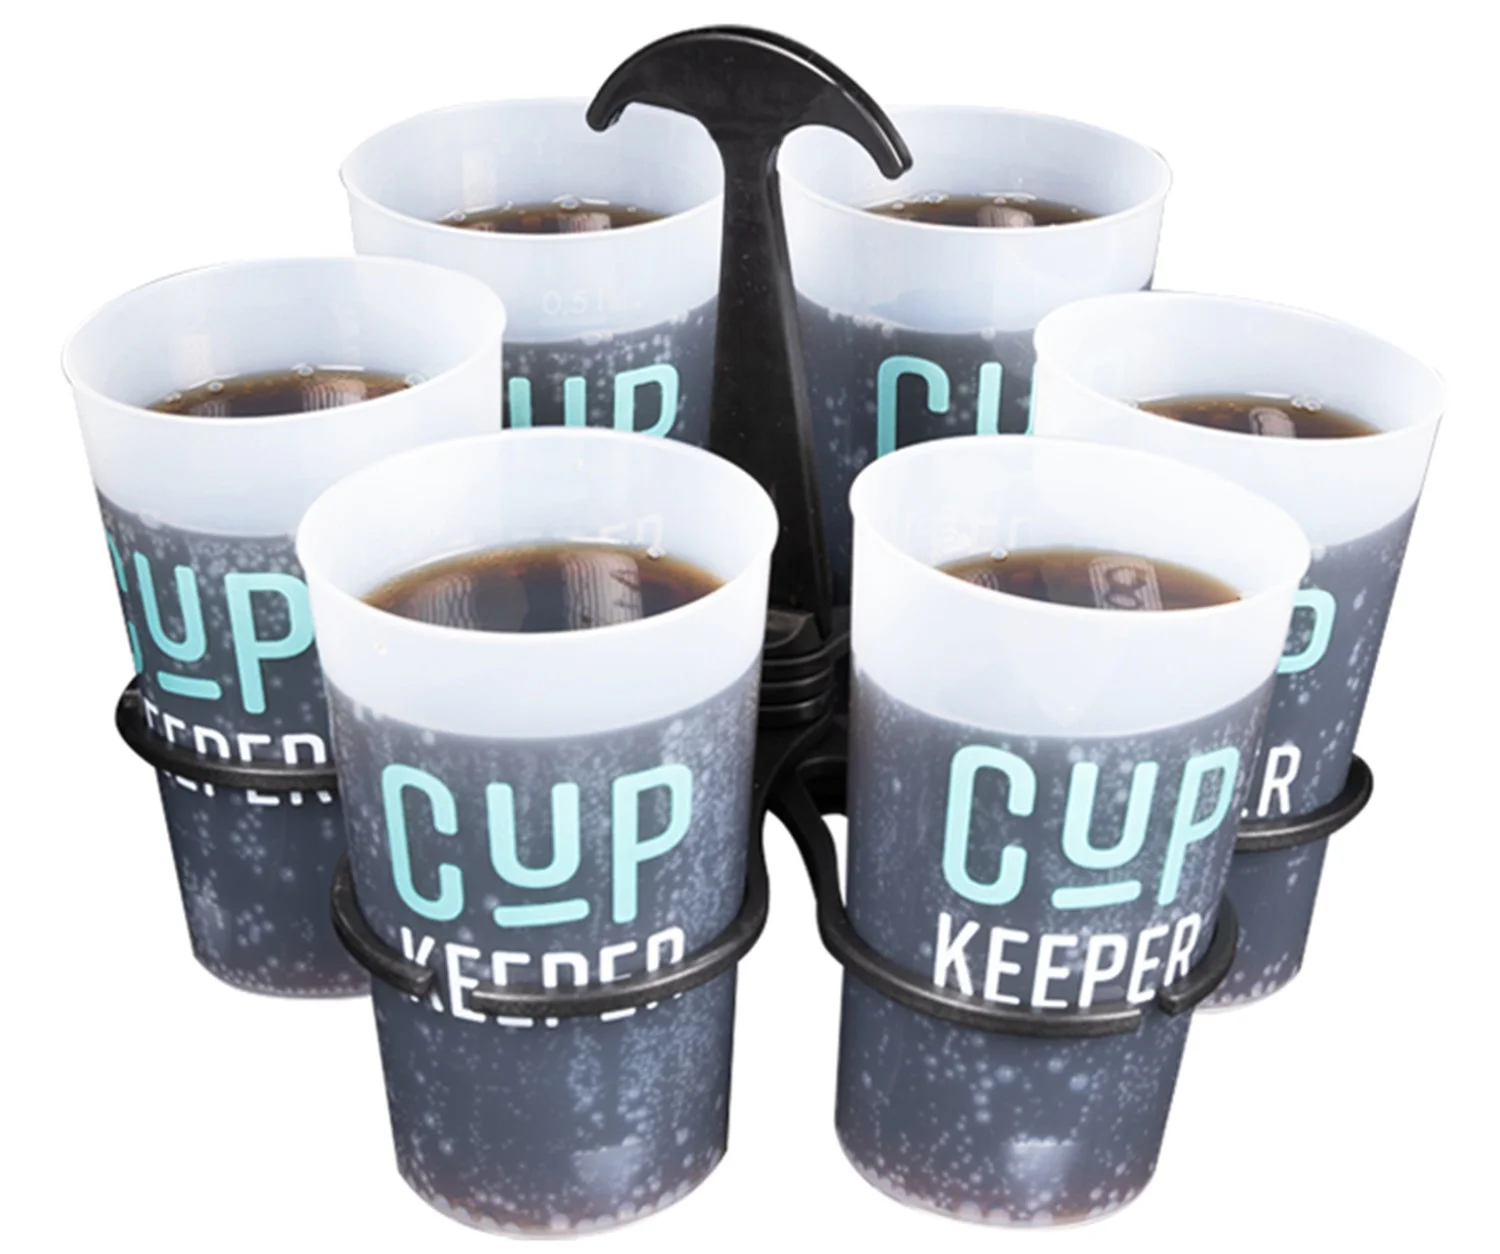 Cupkeeper Cupholder for Festival Cups Branding, Marketing Rock Werchter